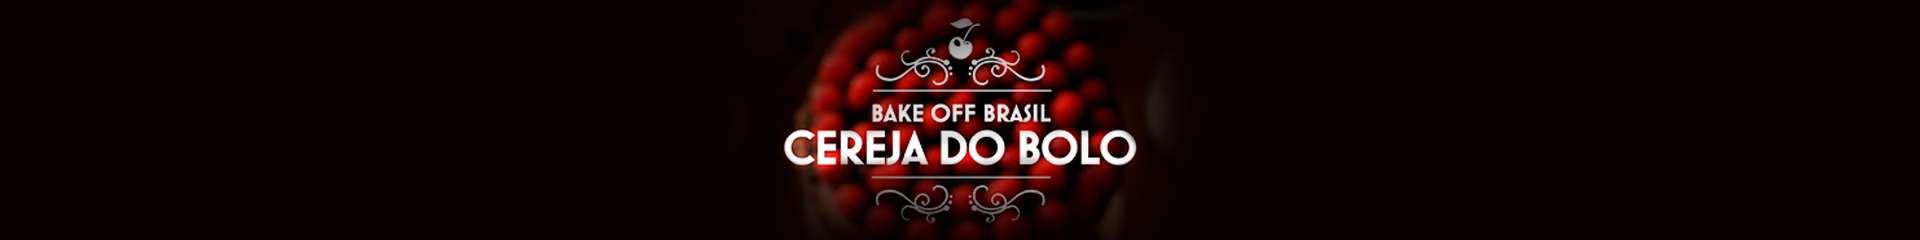 Bake off Brasil - A Cereja do Bolo